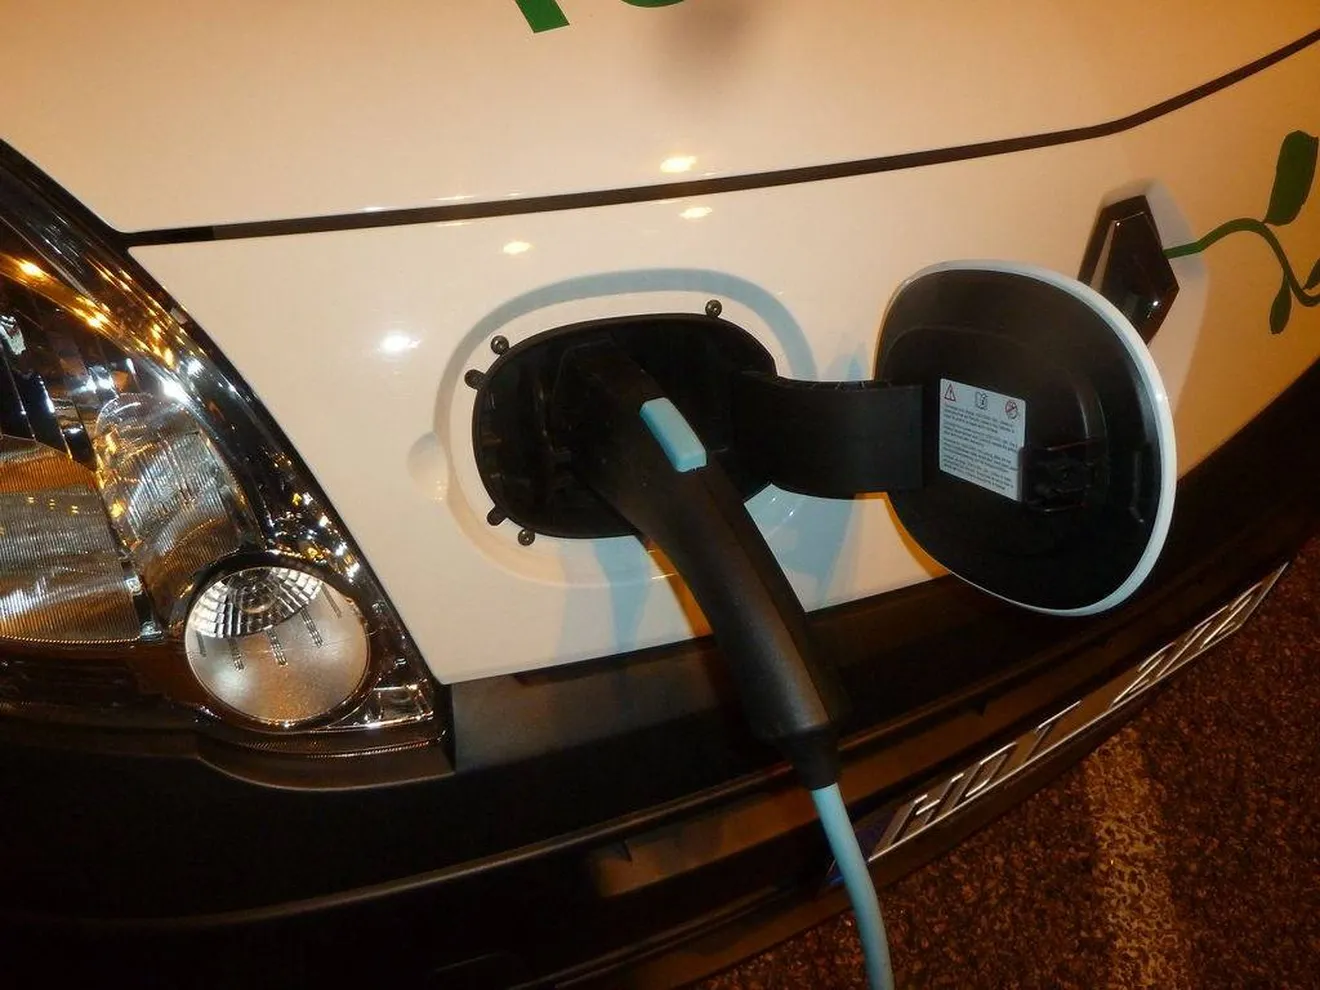 ¿Será un problema que haya "demasiados" coches eléctricos cargando?